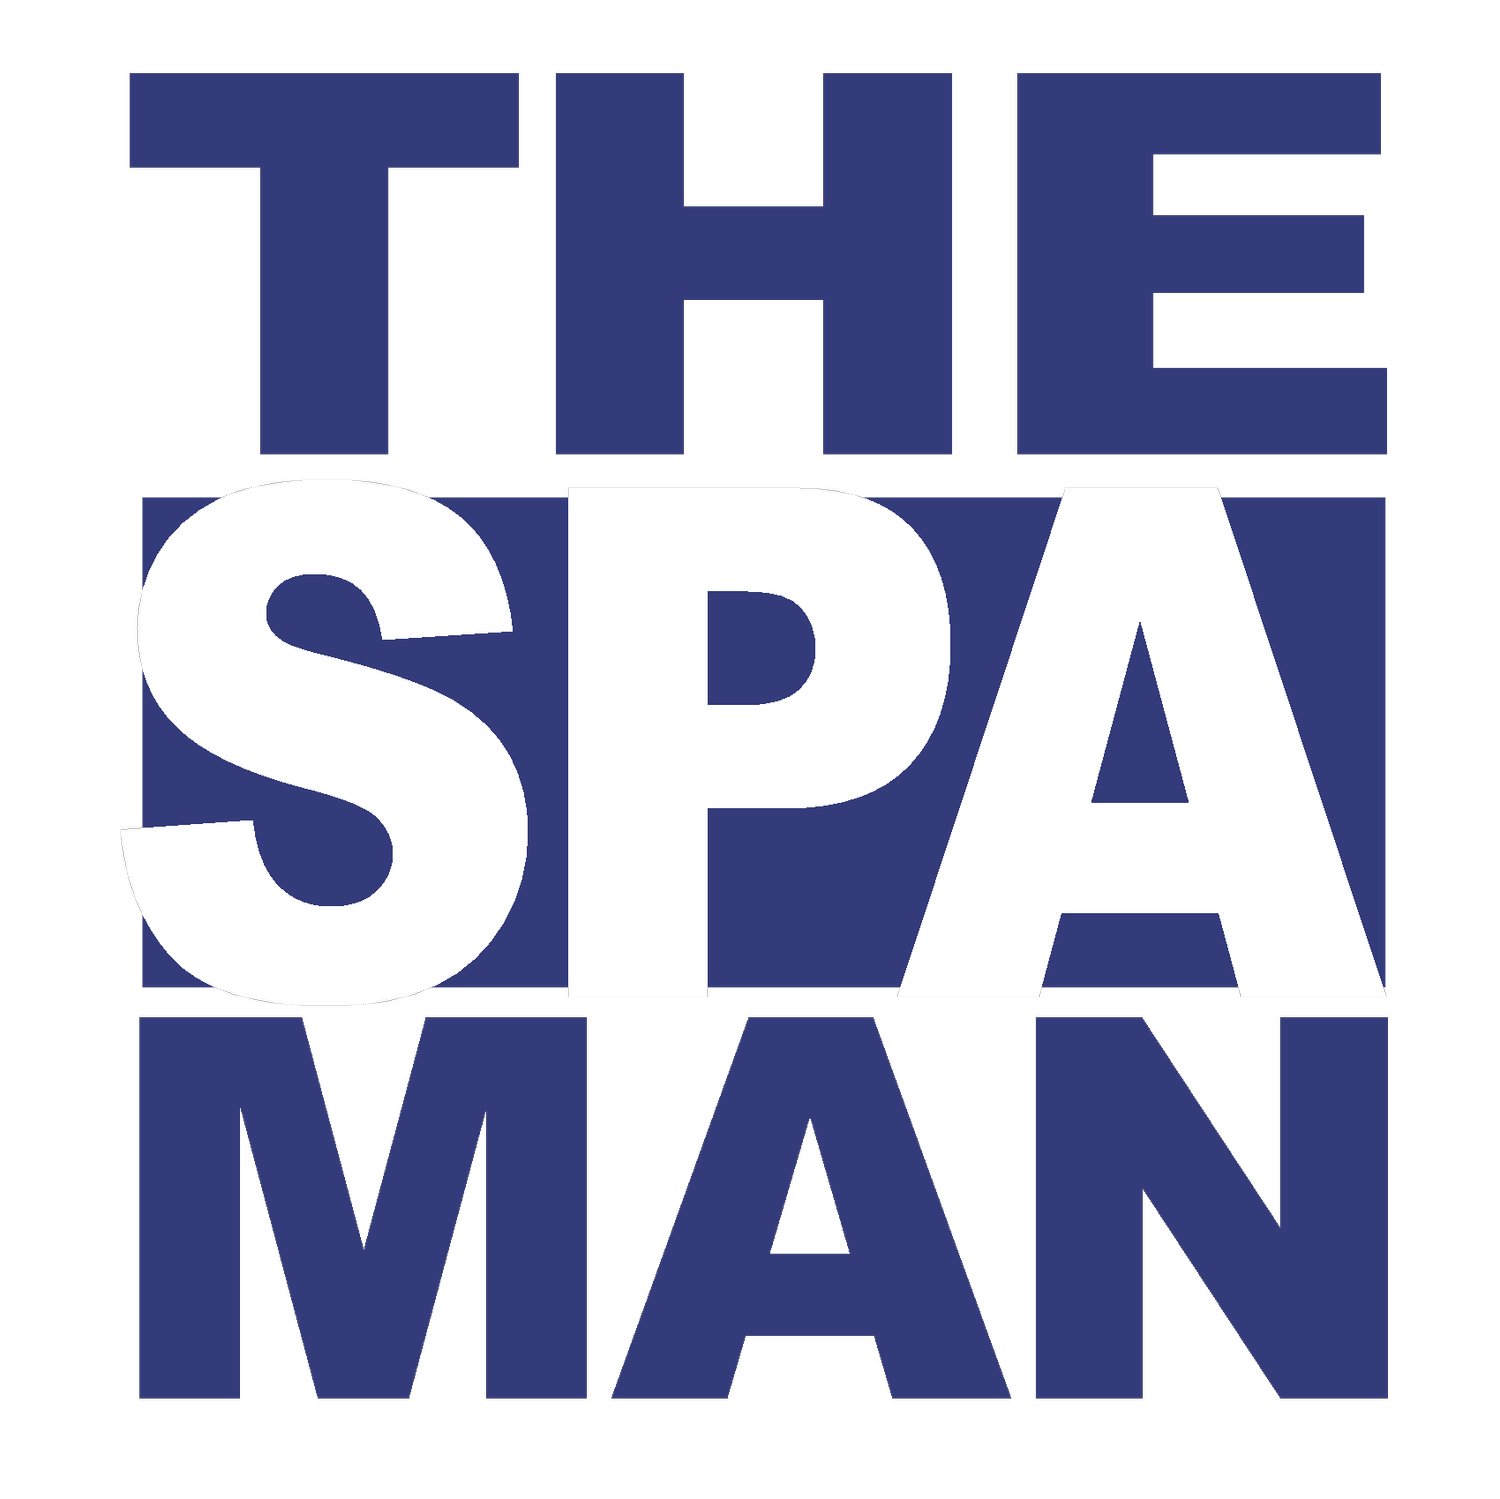 The Spa Man